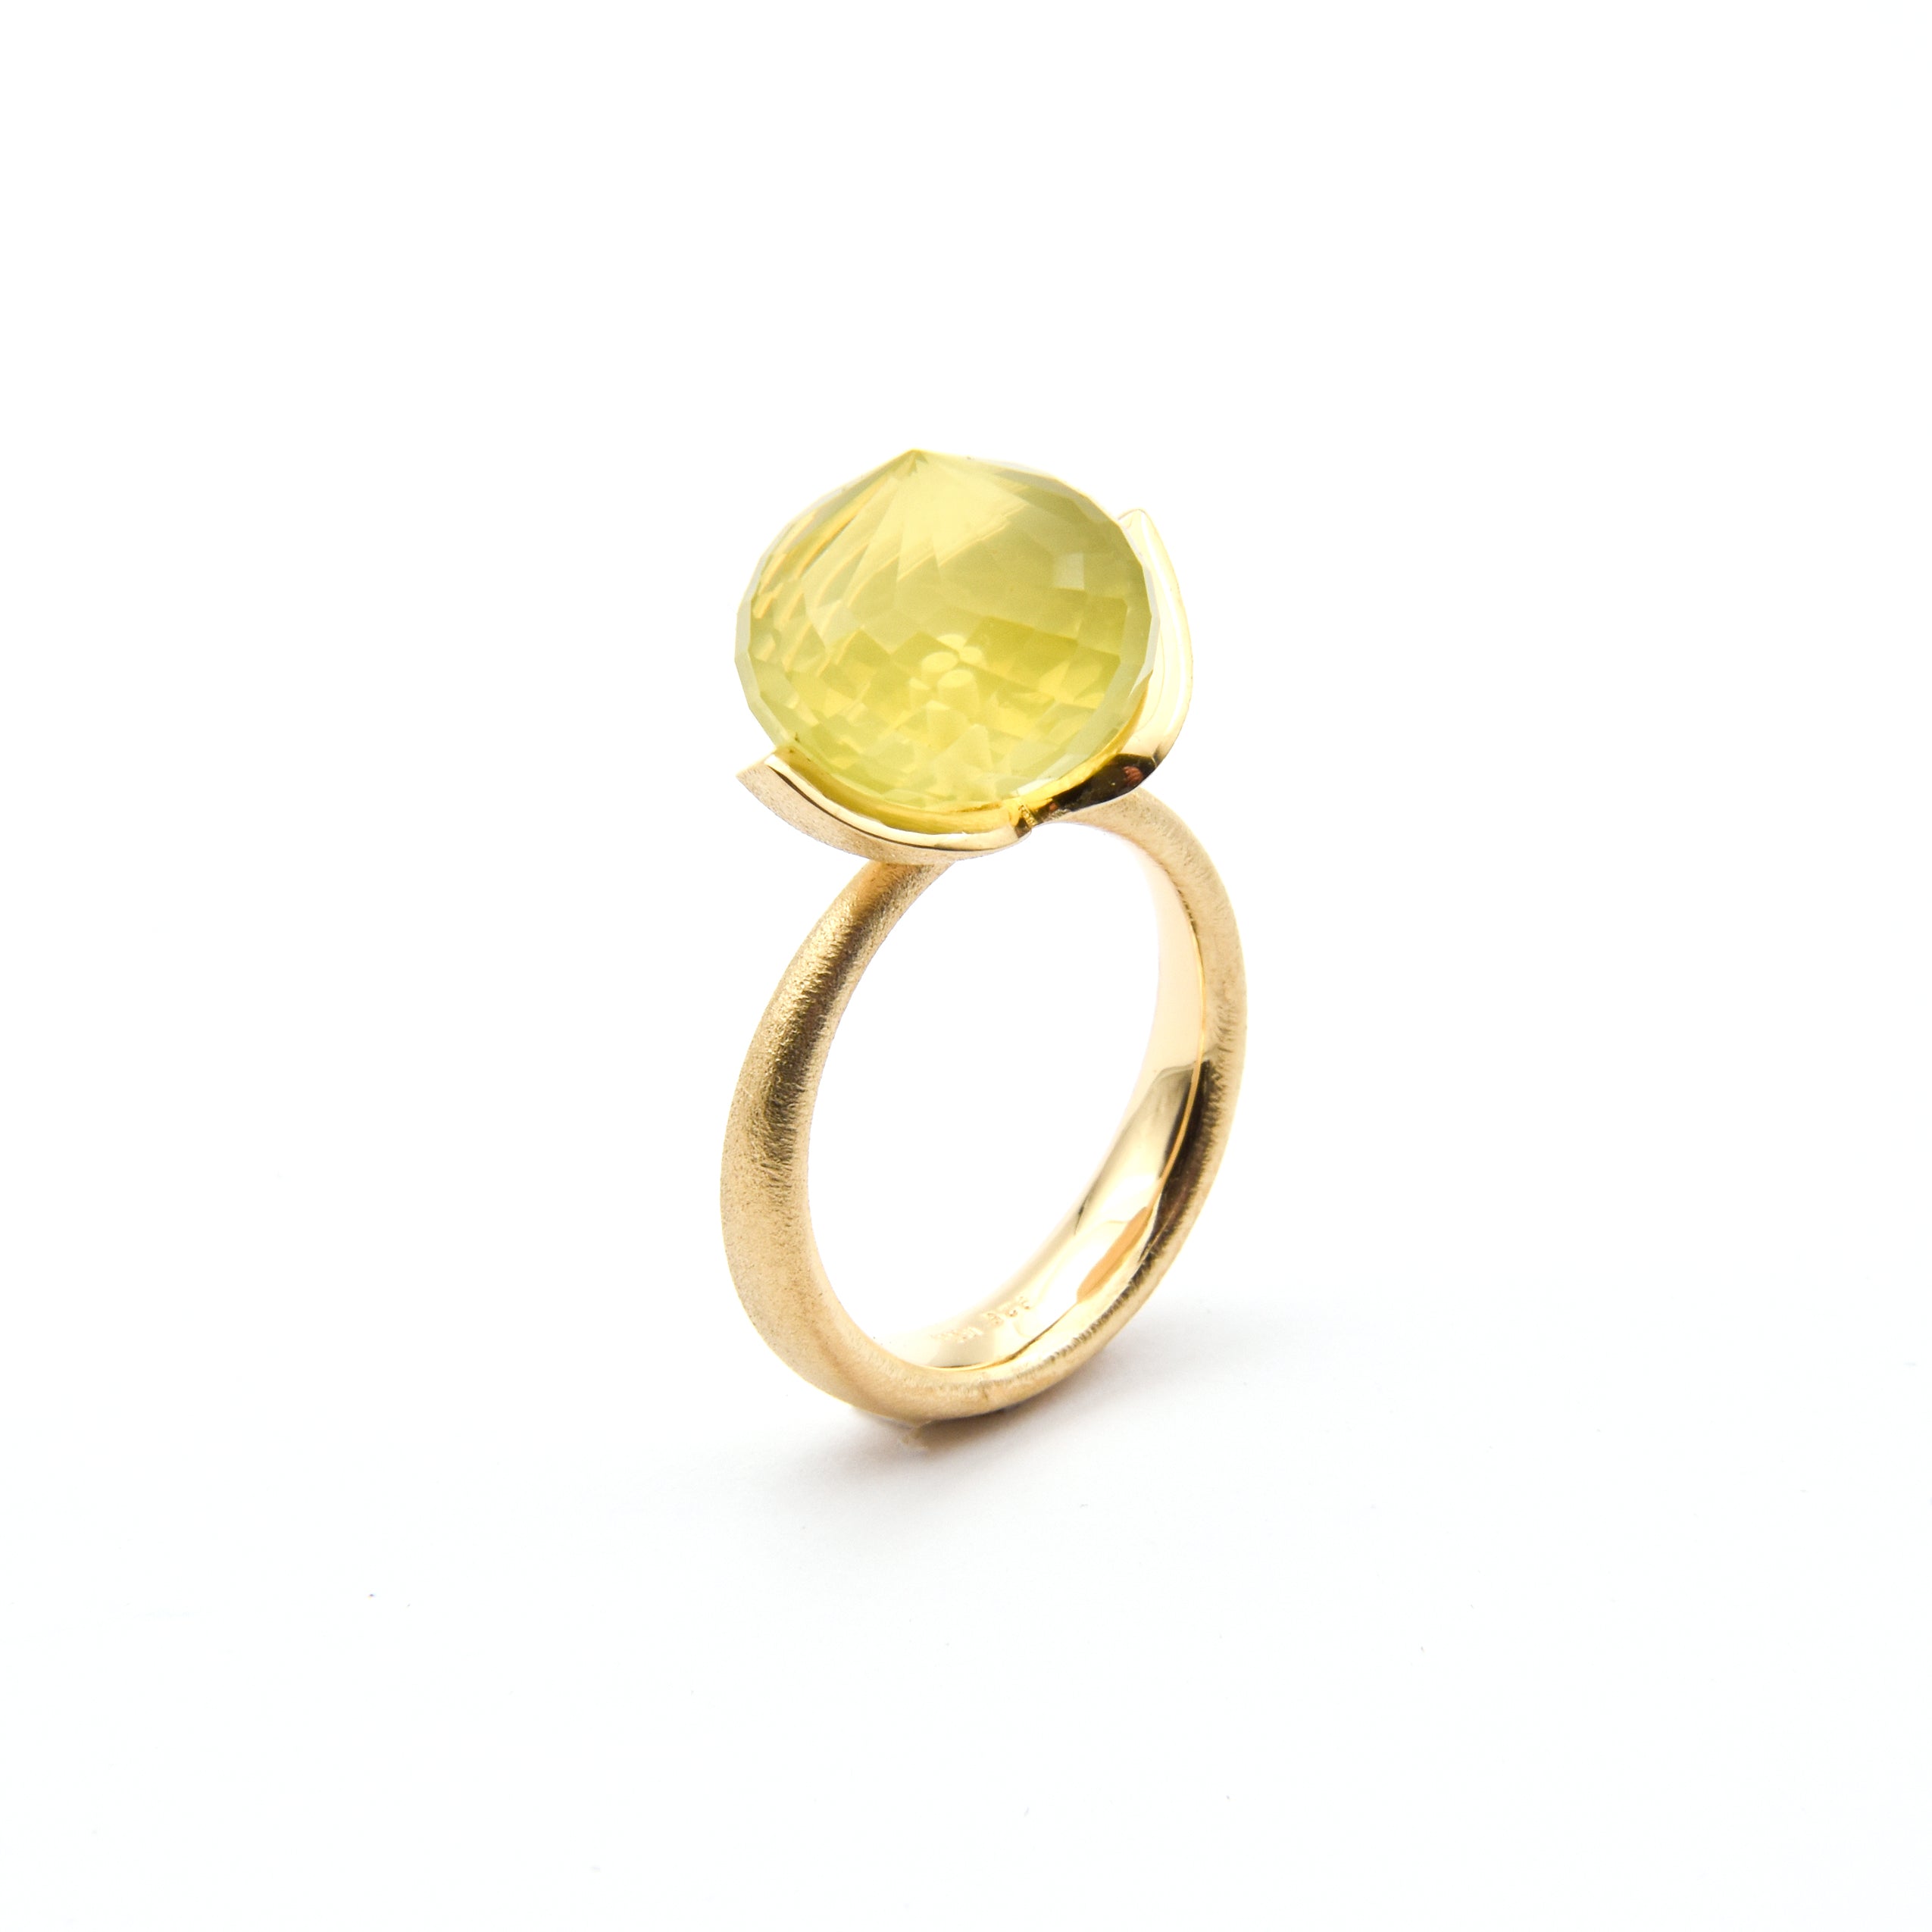 Dolce ring "big" with lemon quartz 925/-